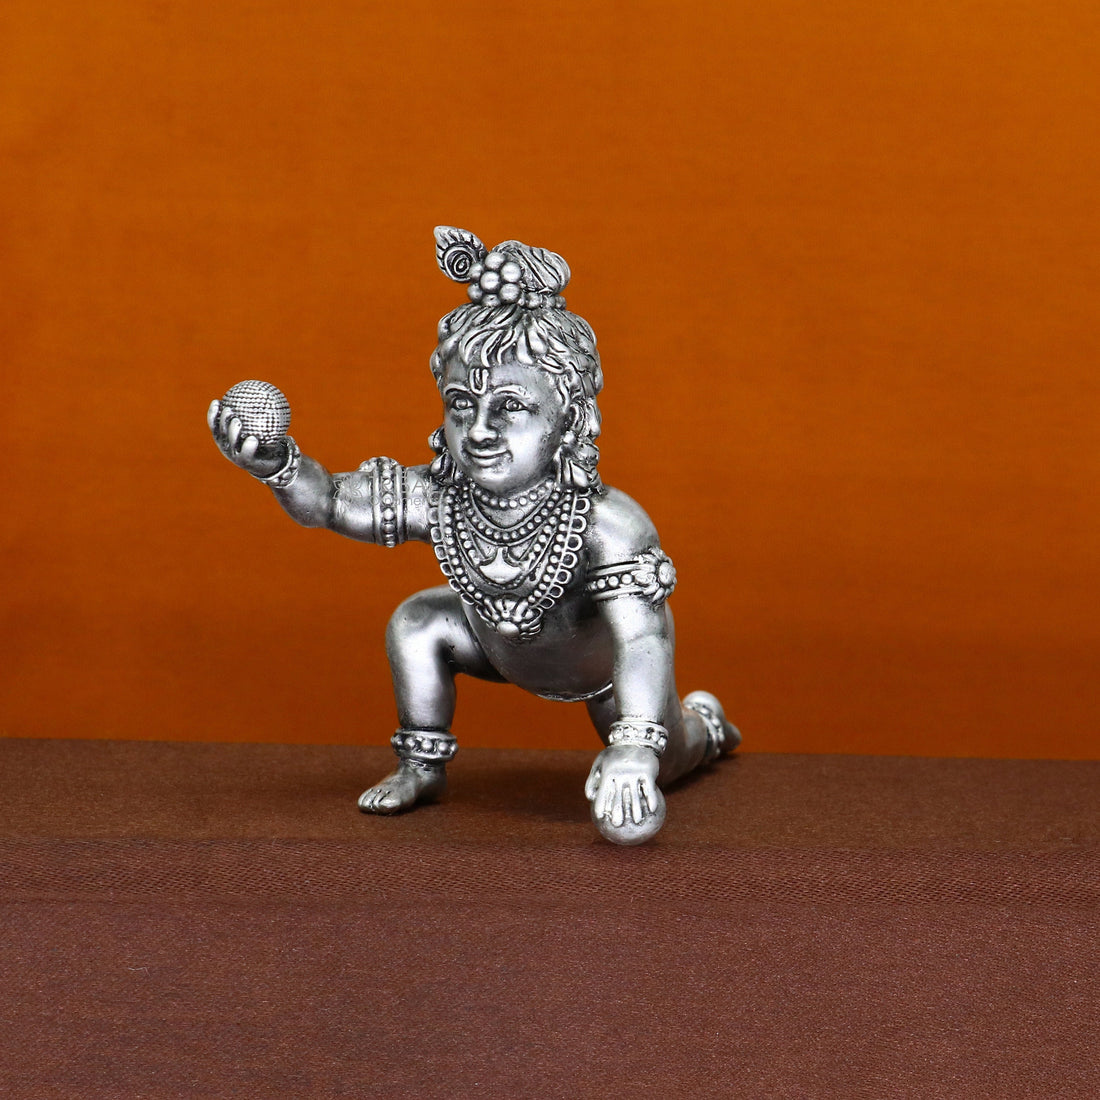 925 Sterling silver Idol Krishna Bal Gopal crawling Krishna statue figurine, silver baby Krishna laddu Gopal sculpture article  art698 - TRIBAL ORNAMENTS